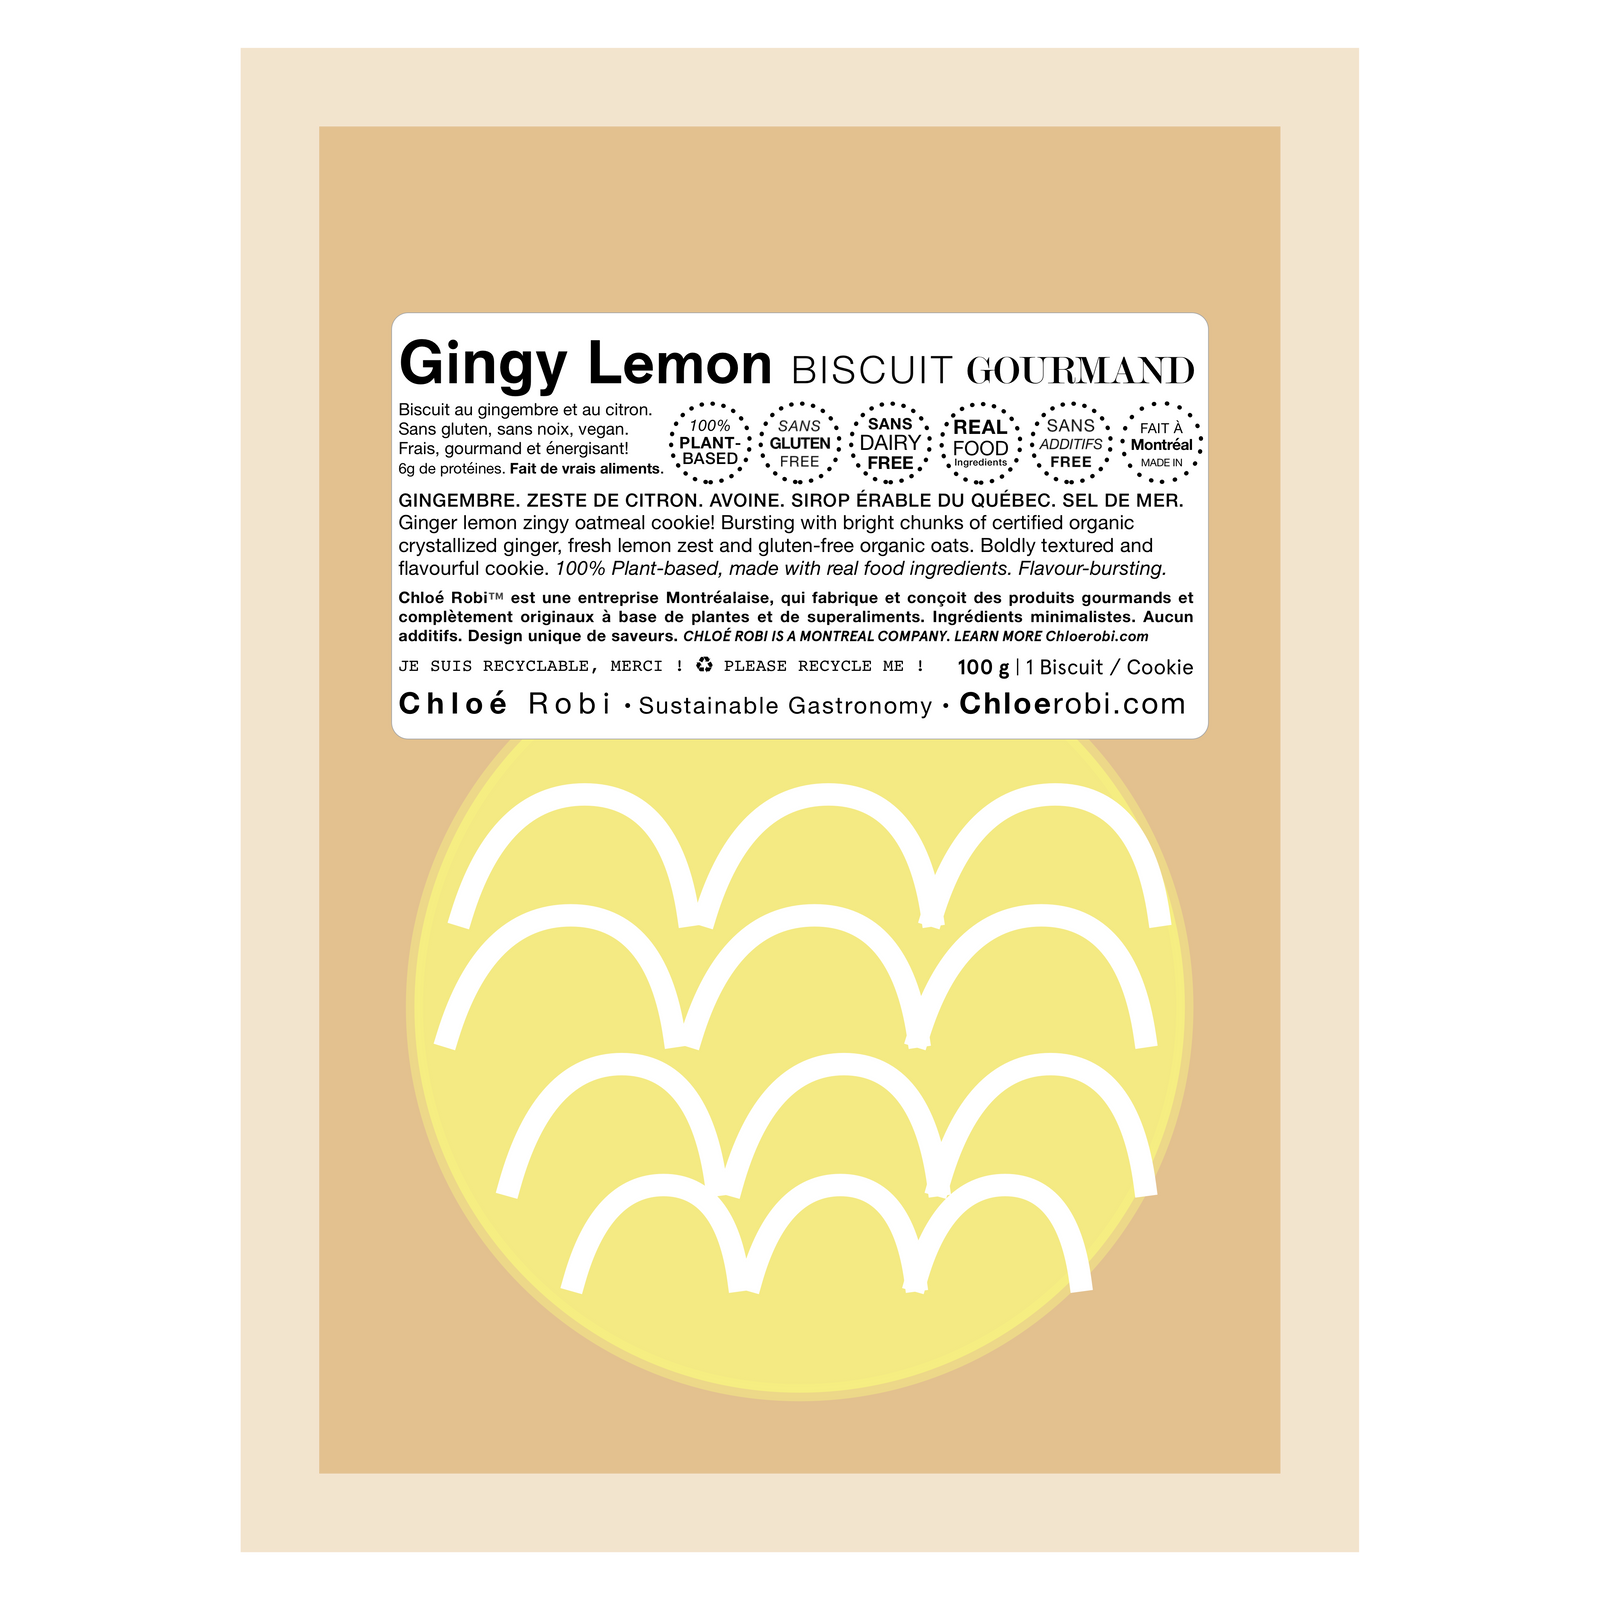 Gingy Lemon